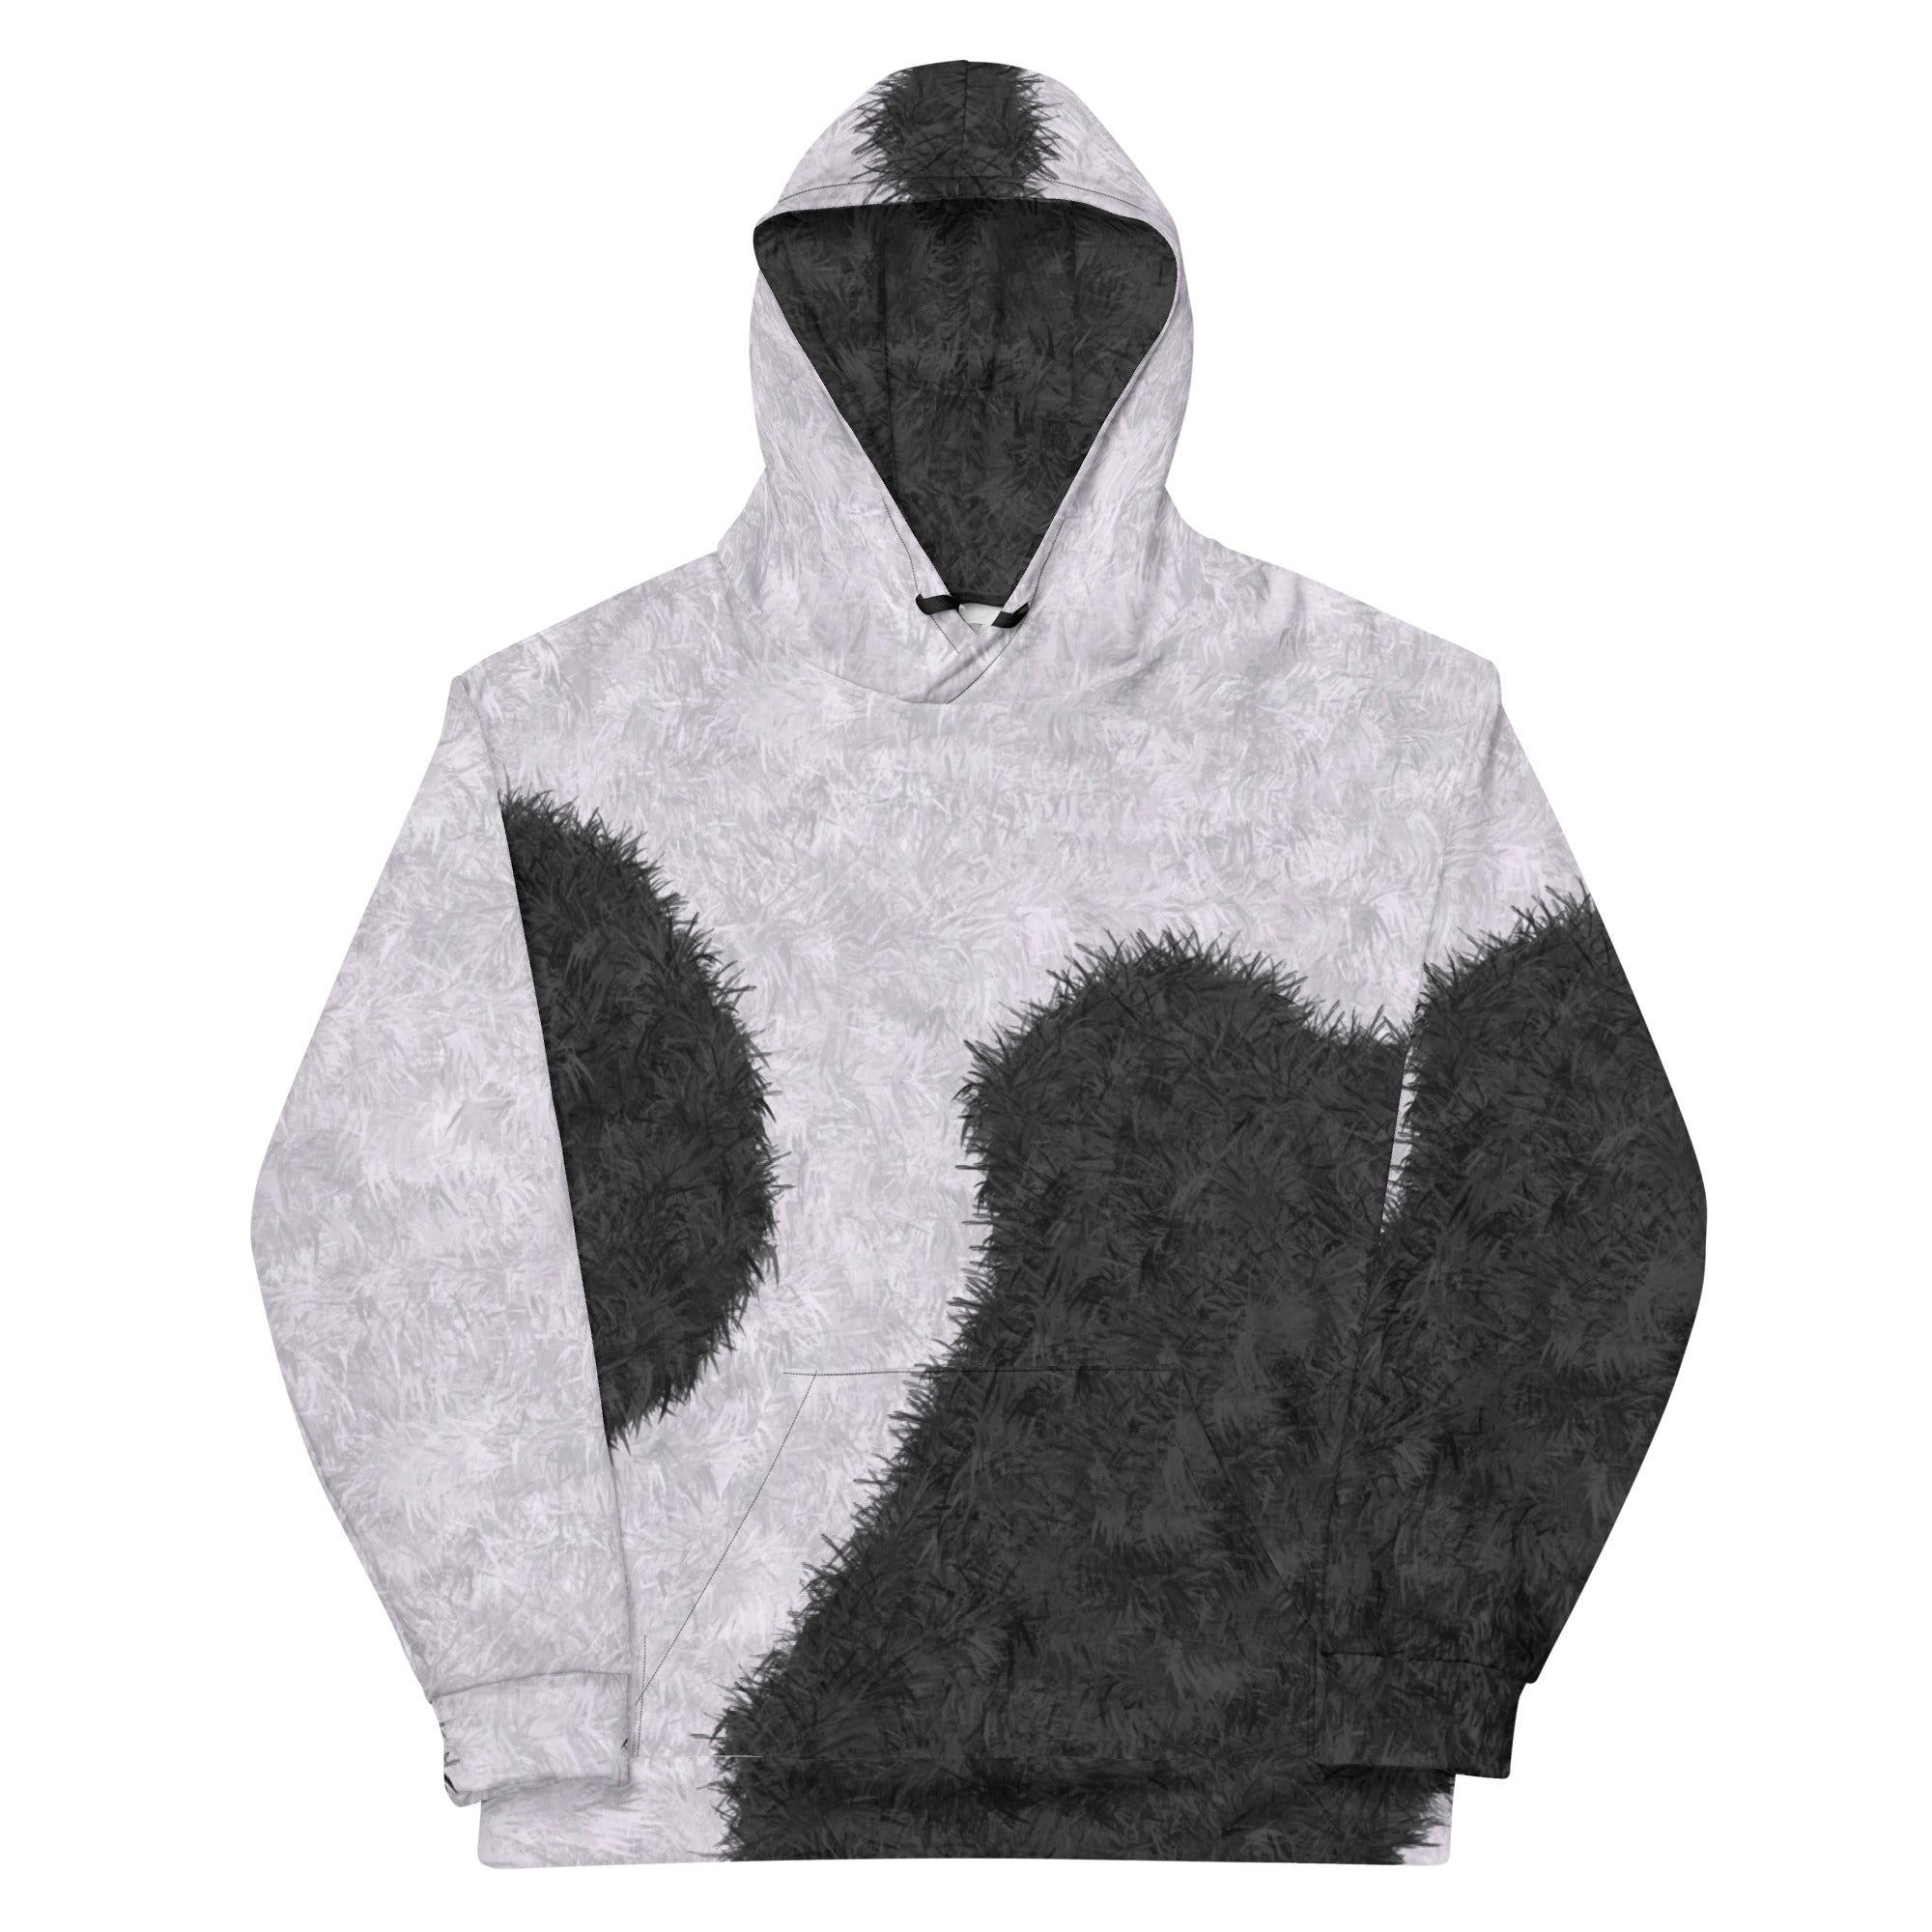 Black and White Fur Print Unisex Hoodie